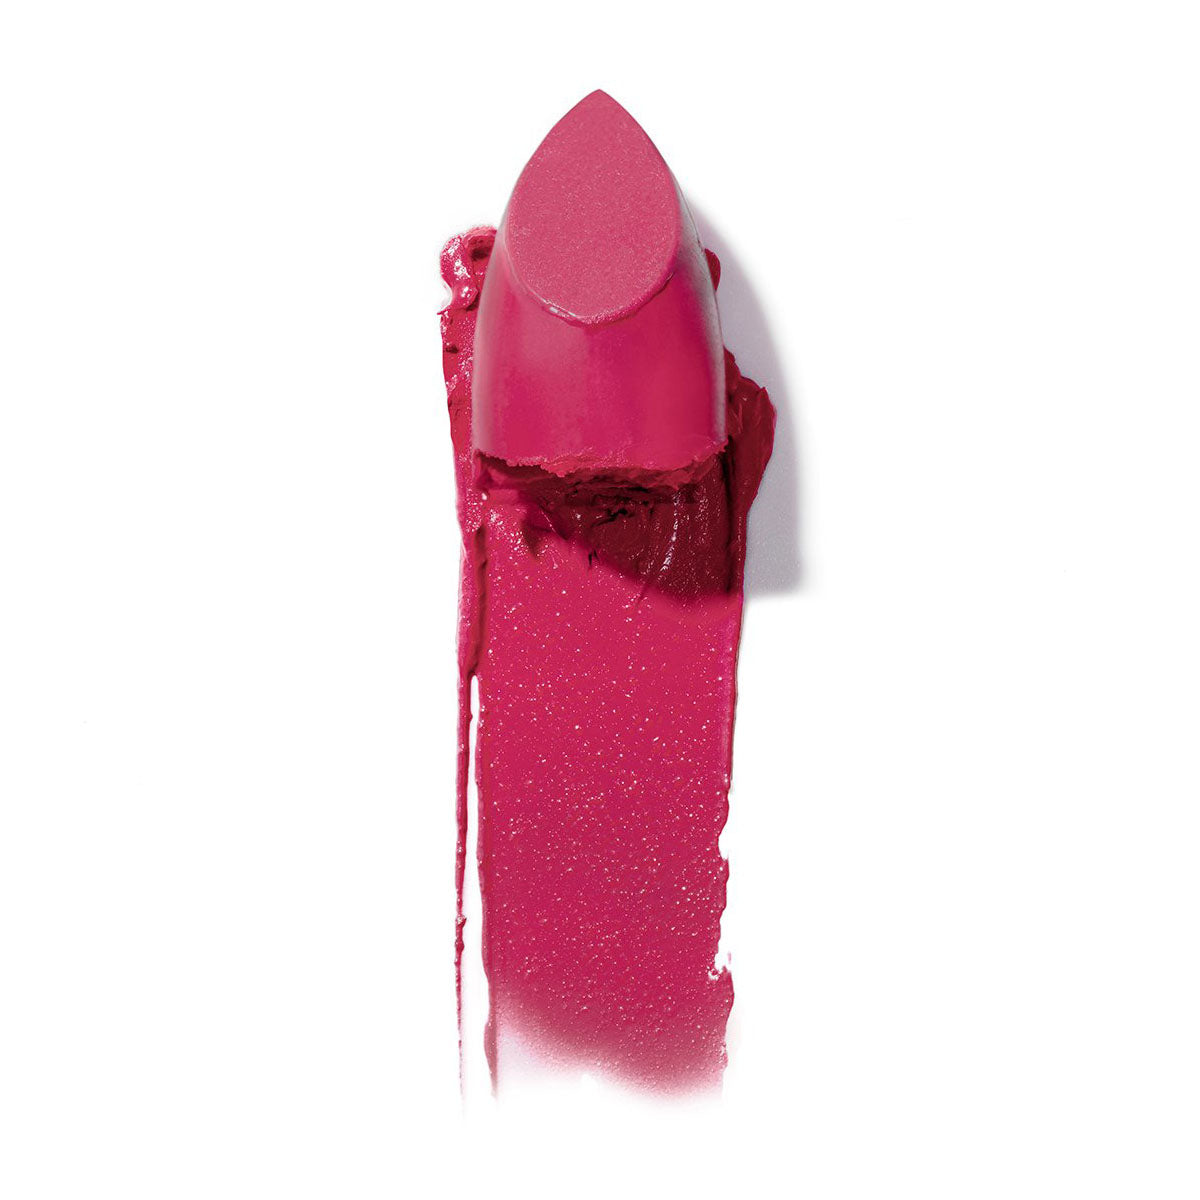 Alternate image of Color Block Lipstick in Knockout